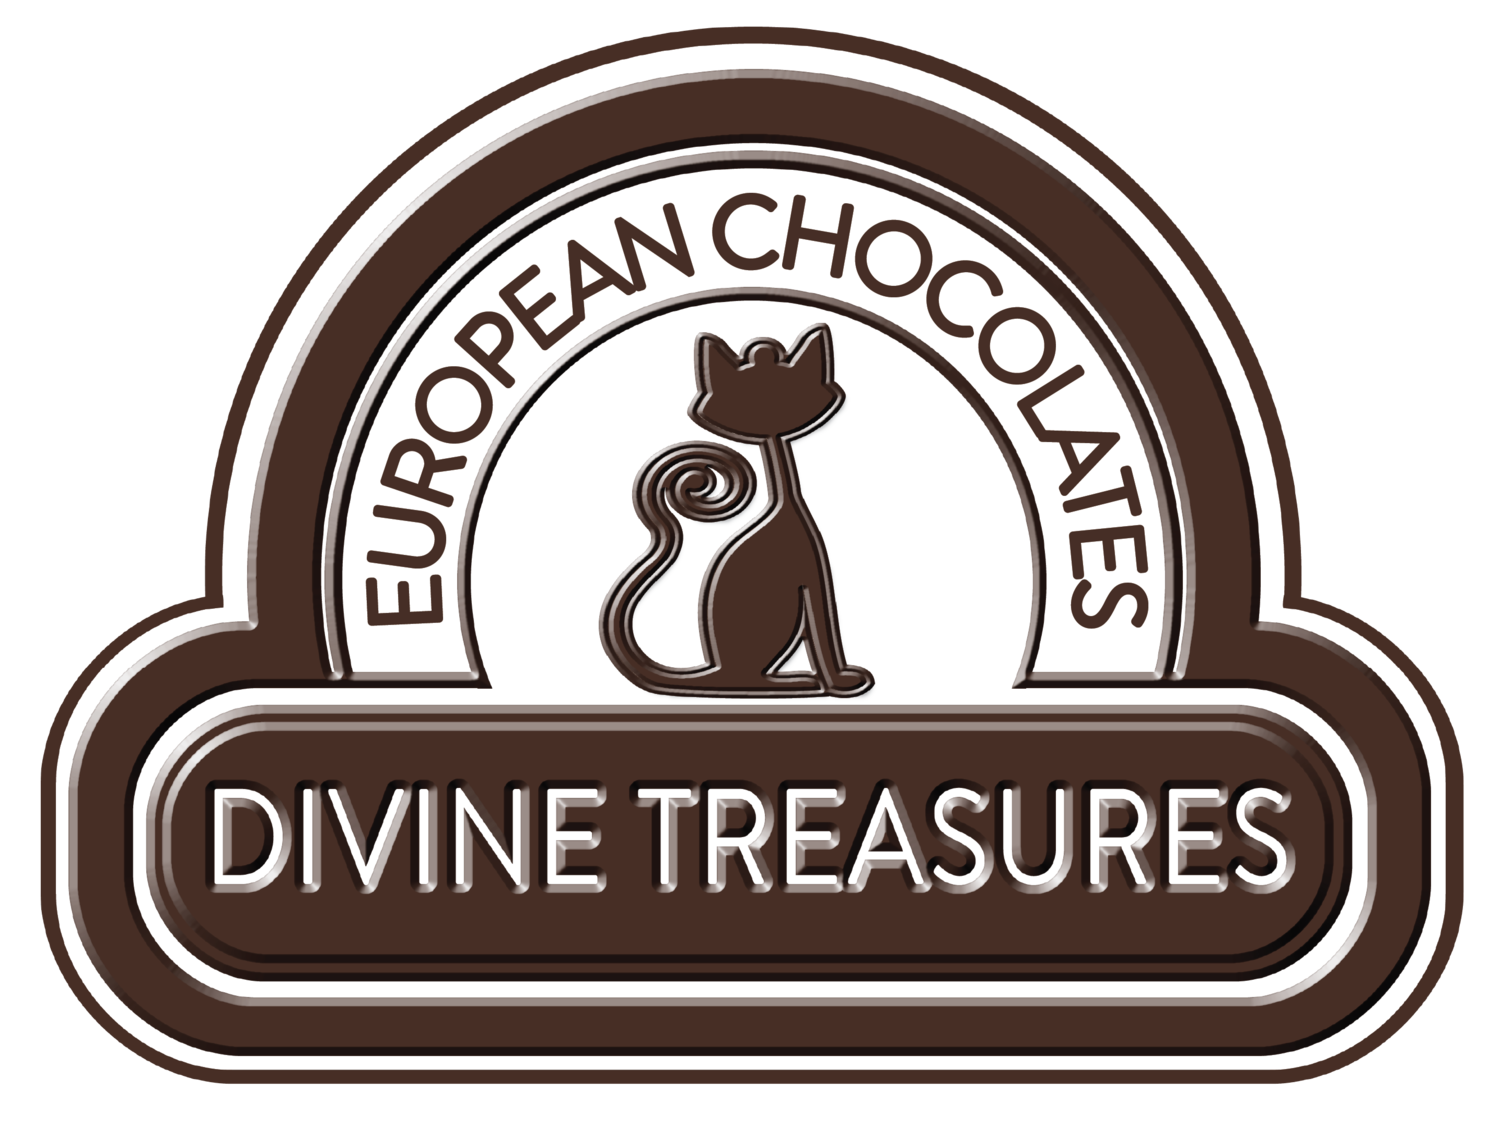 Divine Treasures Chocolate